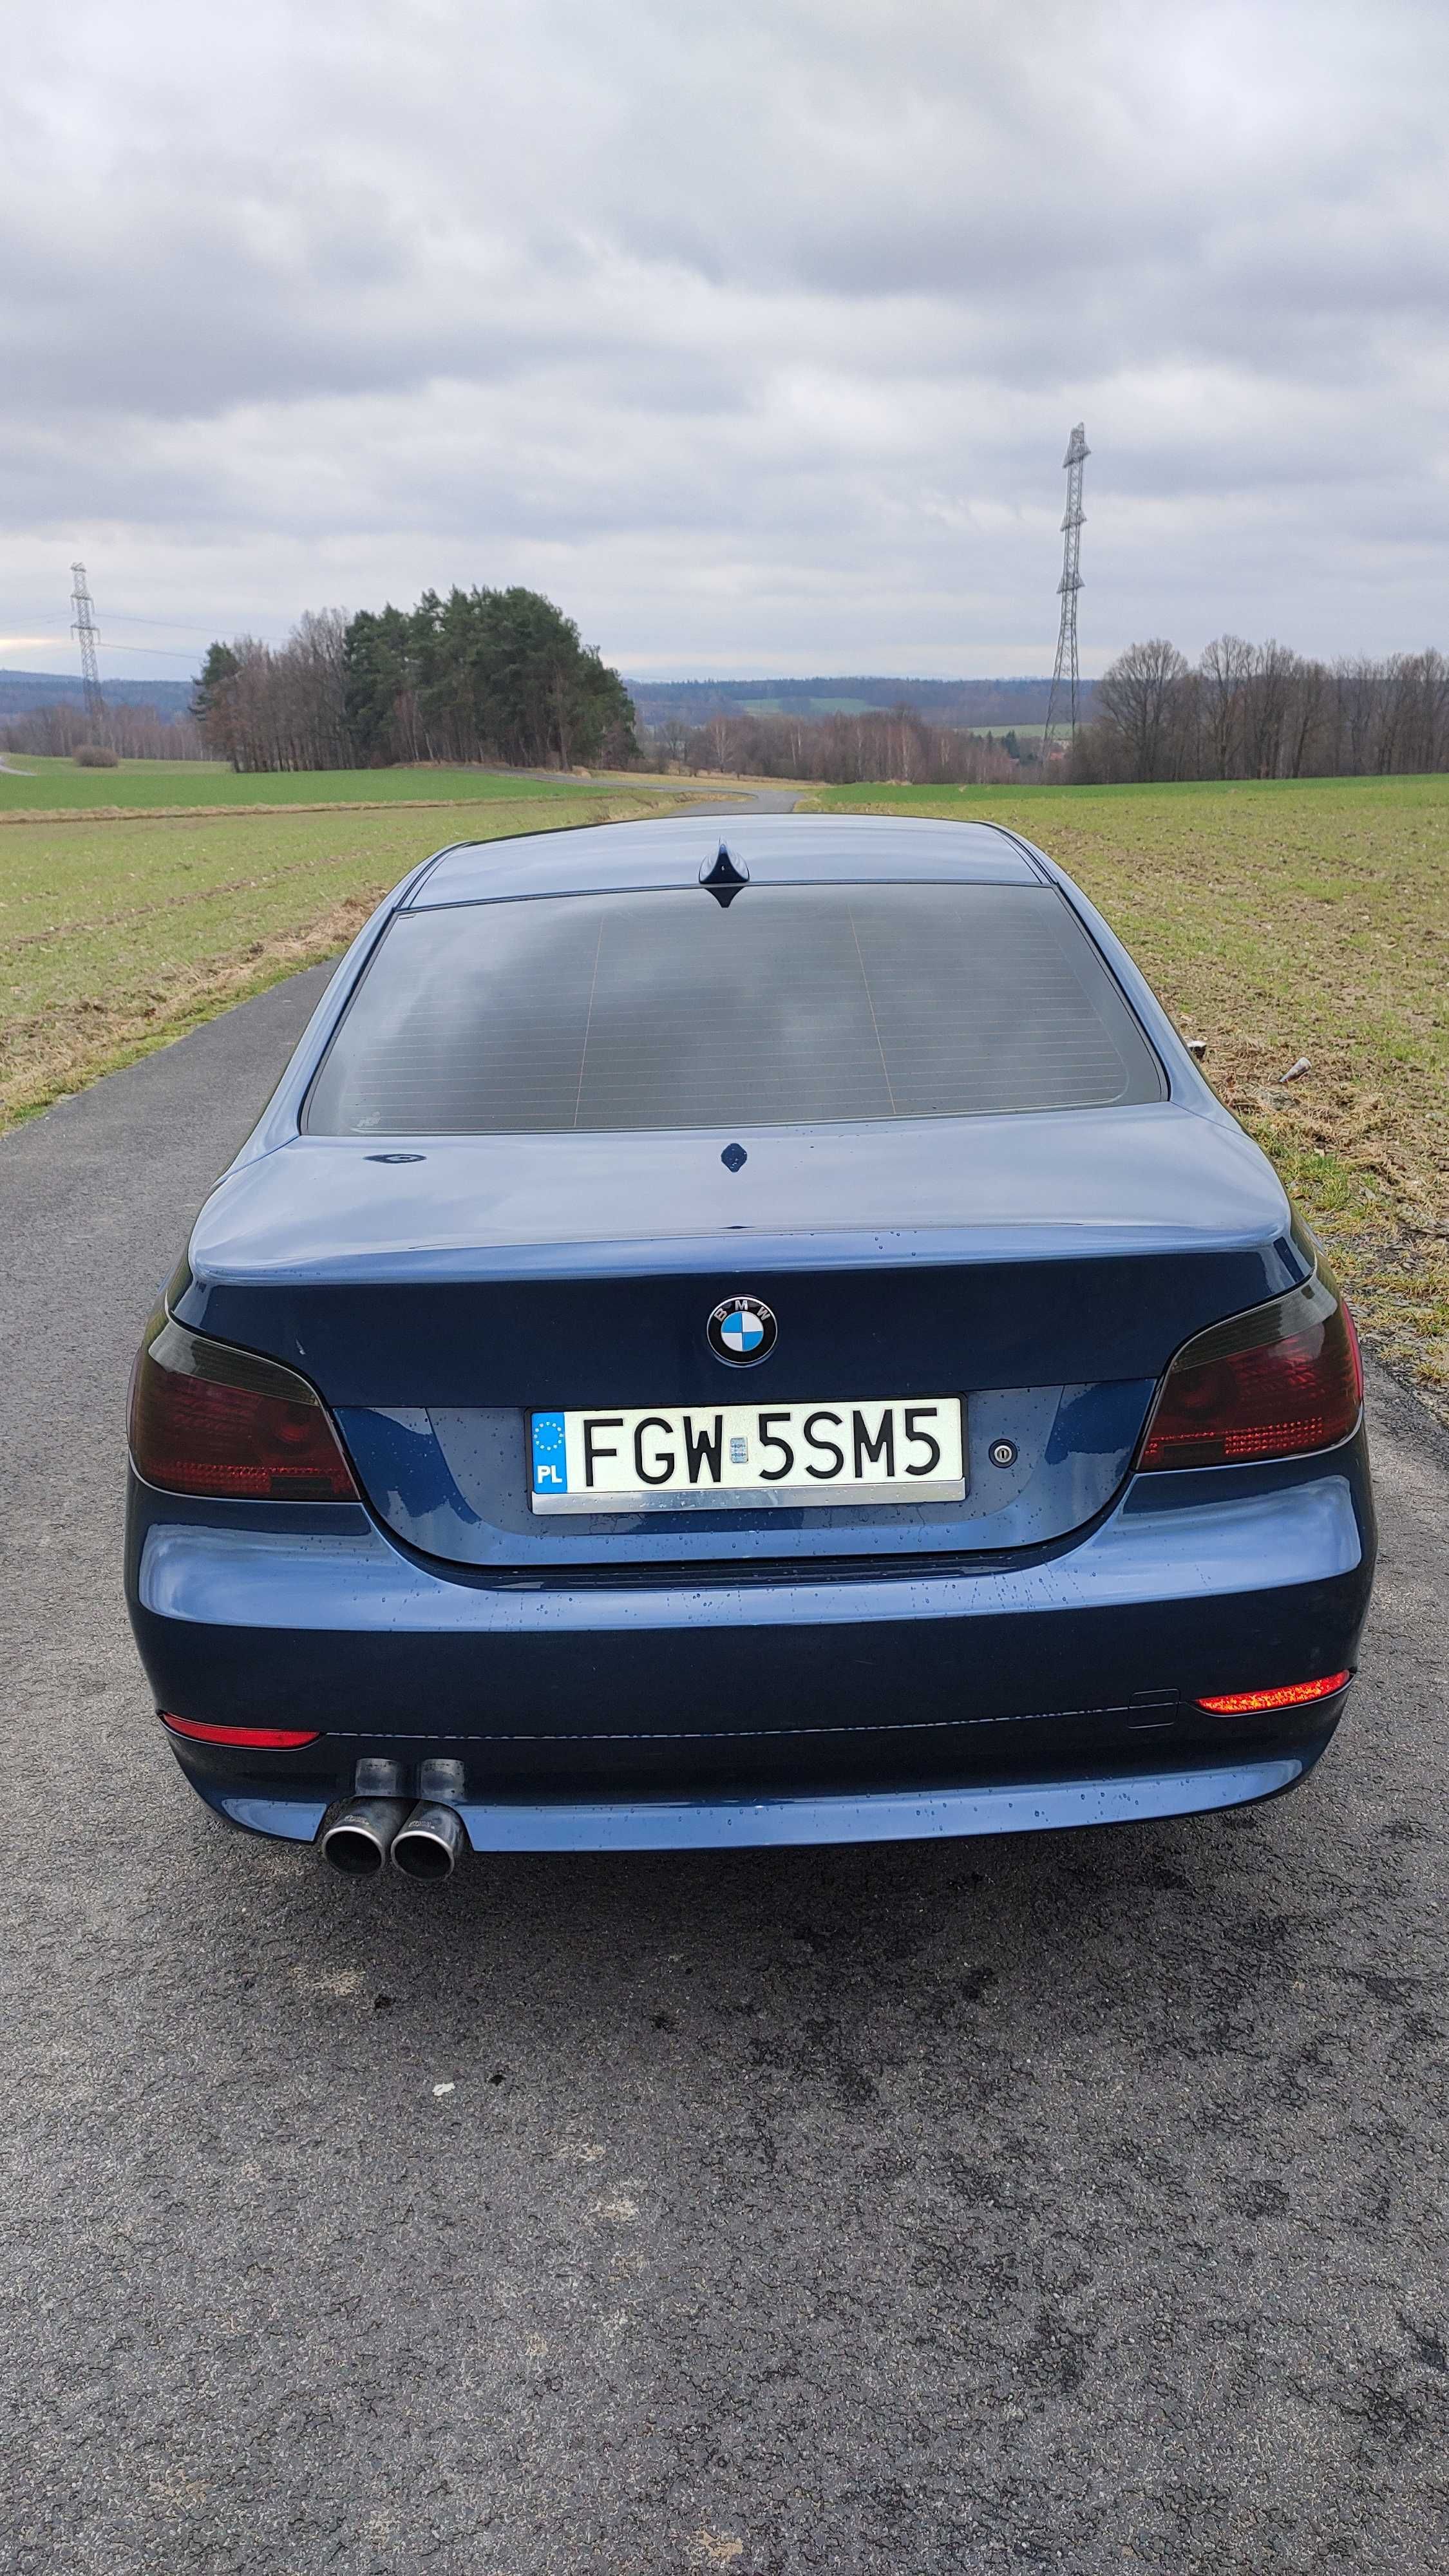 BMW 520 2,0 E zadbana tuning gwint czip mocy